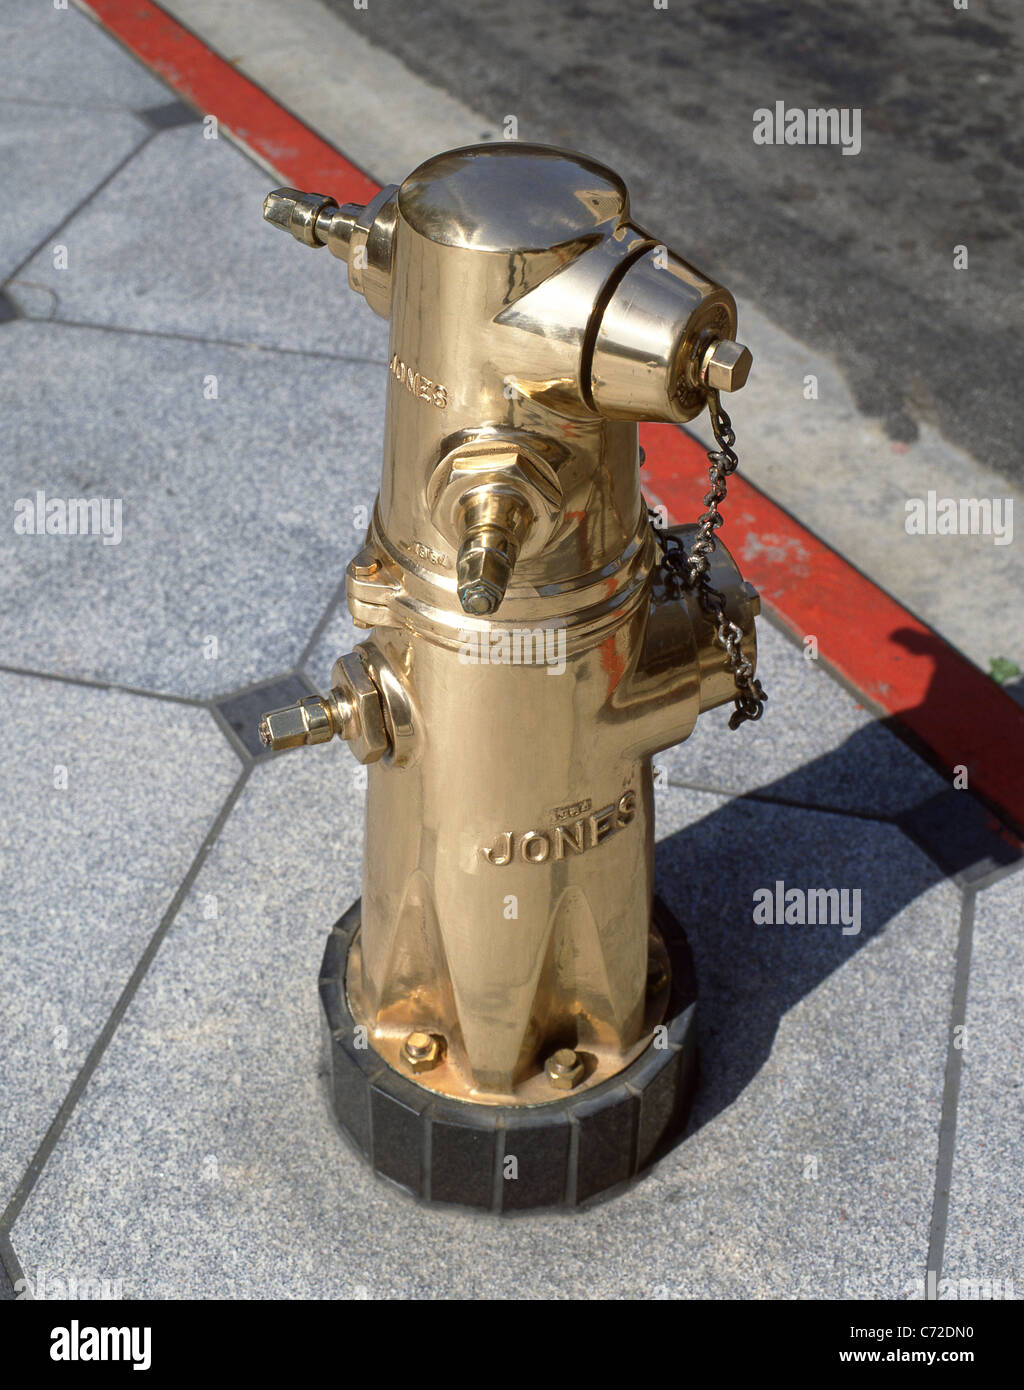 Copper-coloured fire hydrant on sidewalk, San Diego, California, United States of America Stock Photo